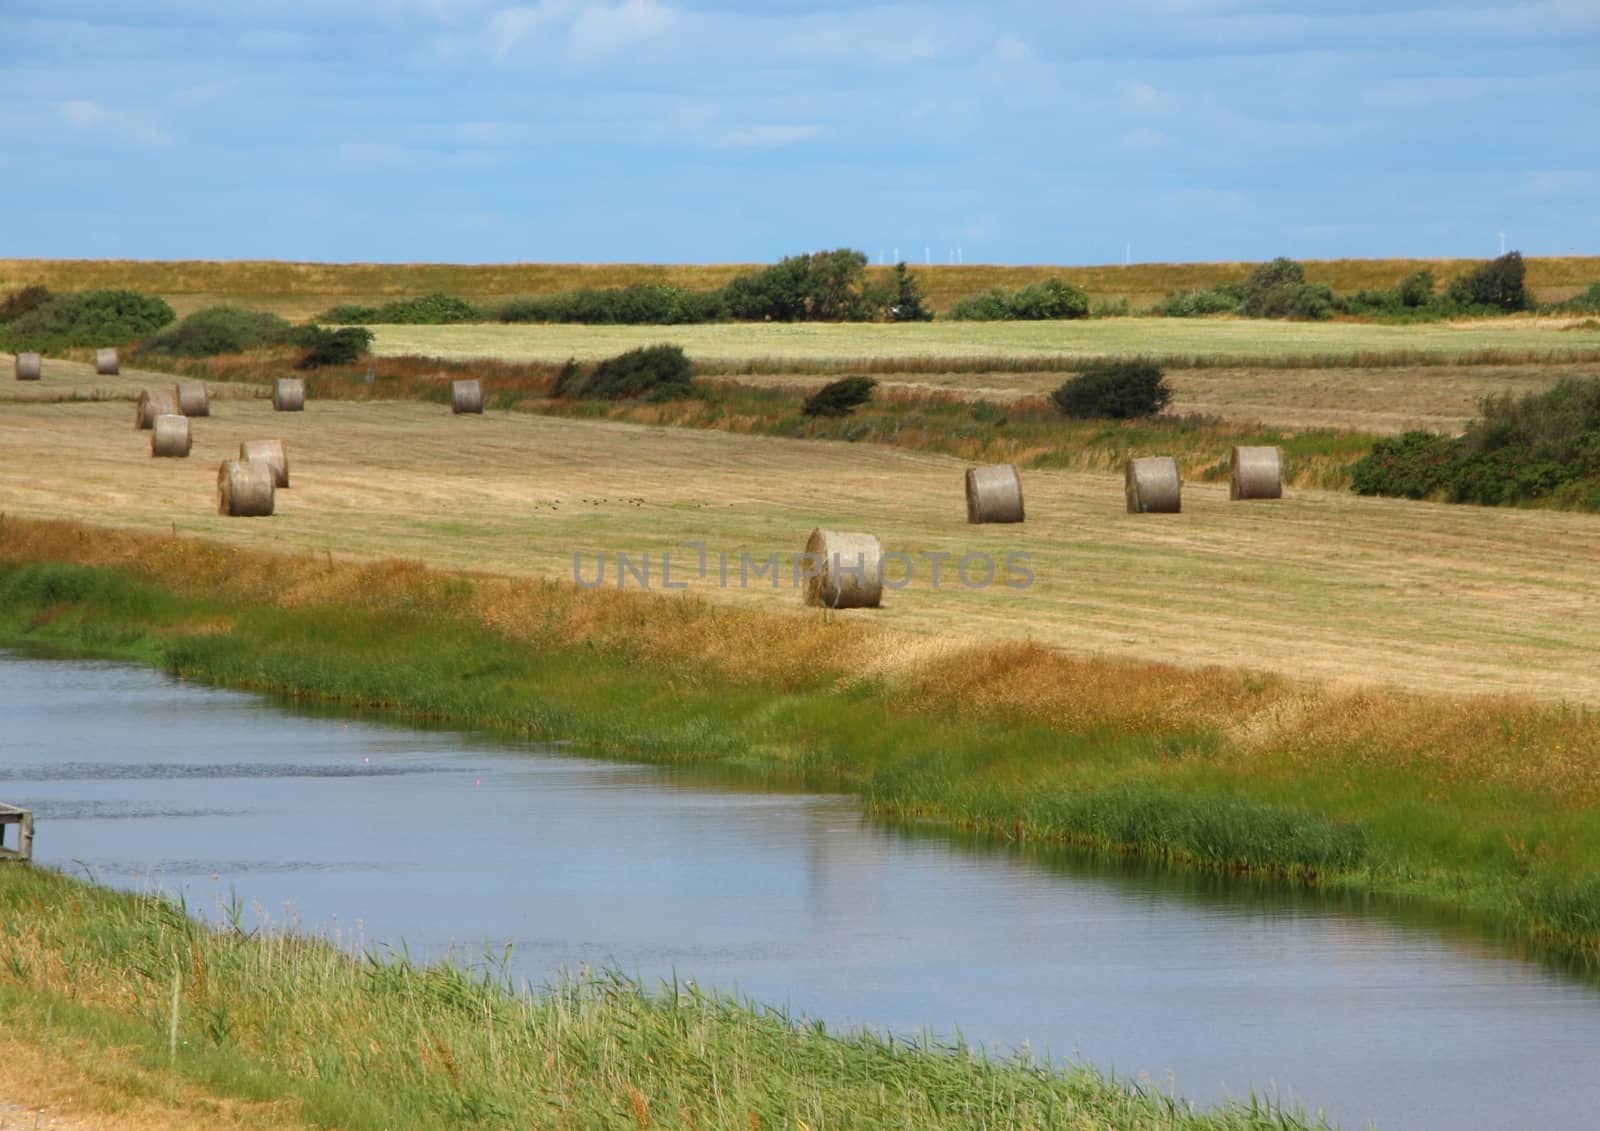 Round Golden Straw Bales in Summer Landscape Field with River